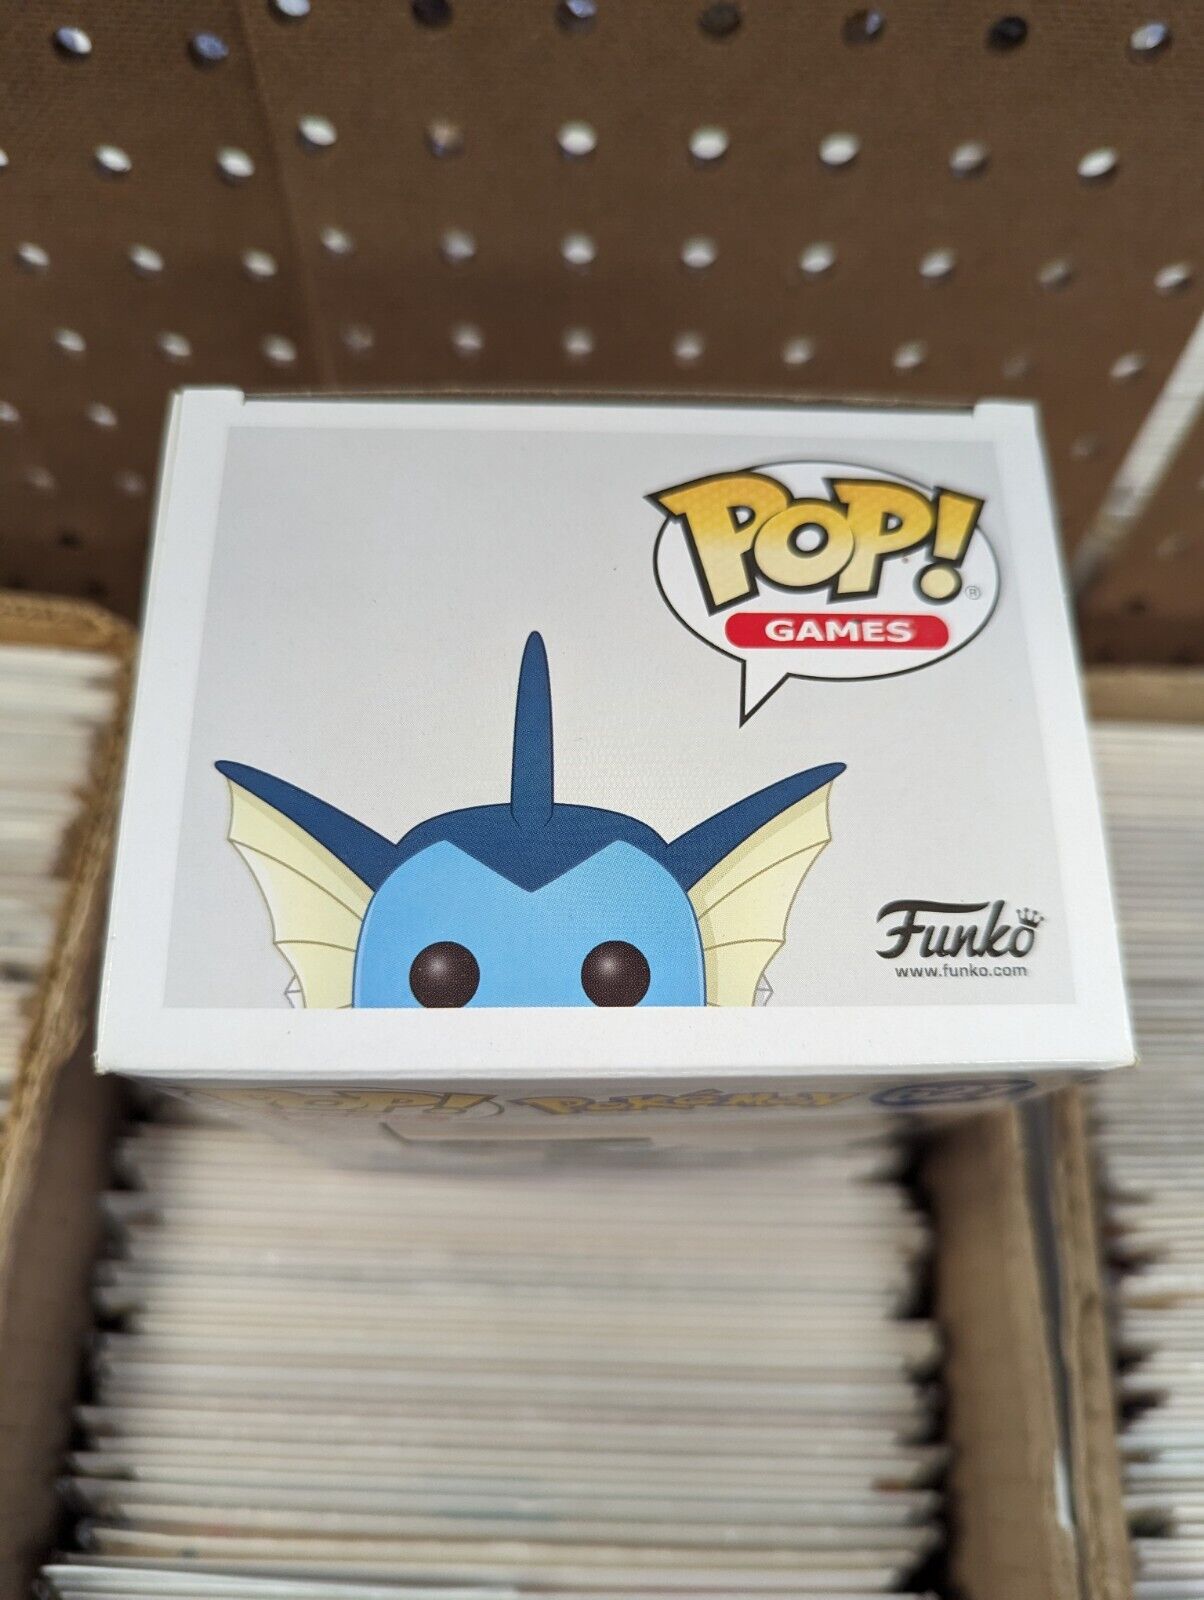 Funko Pop Vaporeon 627 Diamond Collection Pokemon